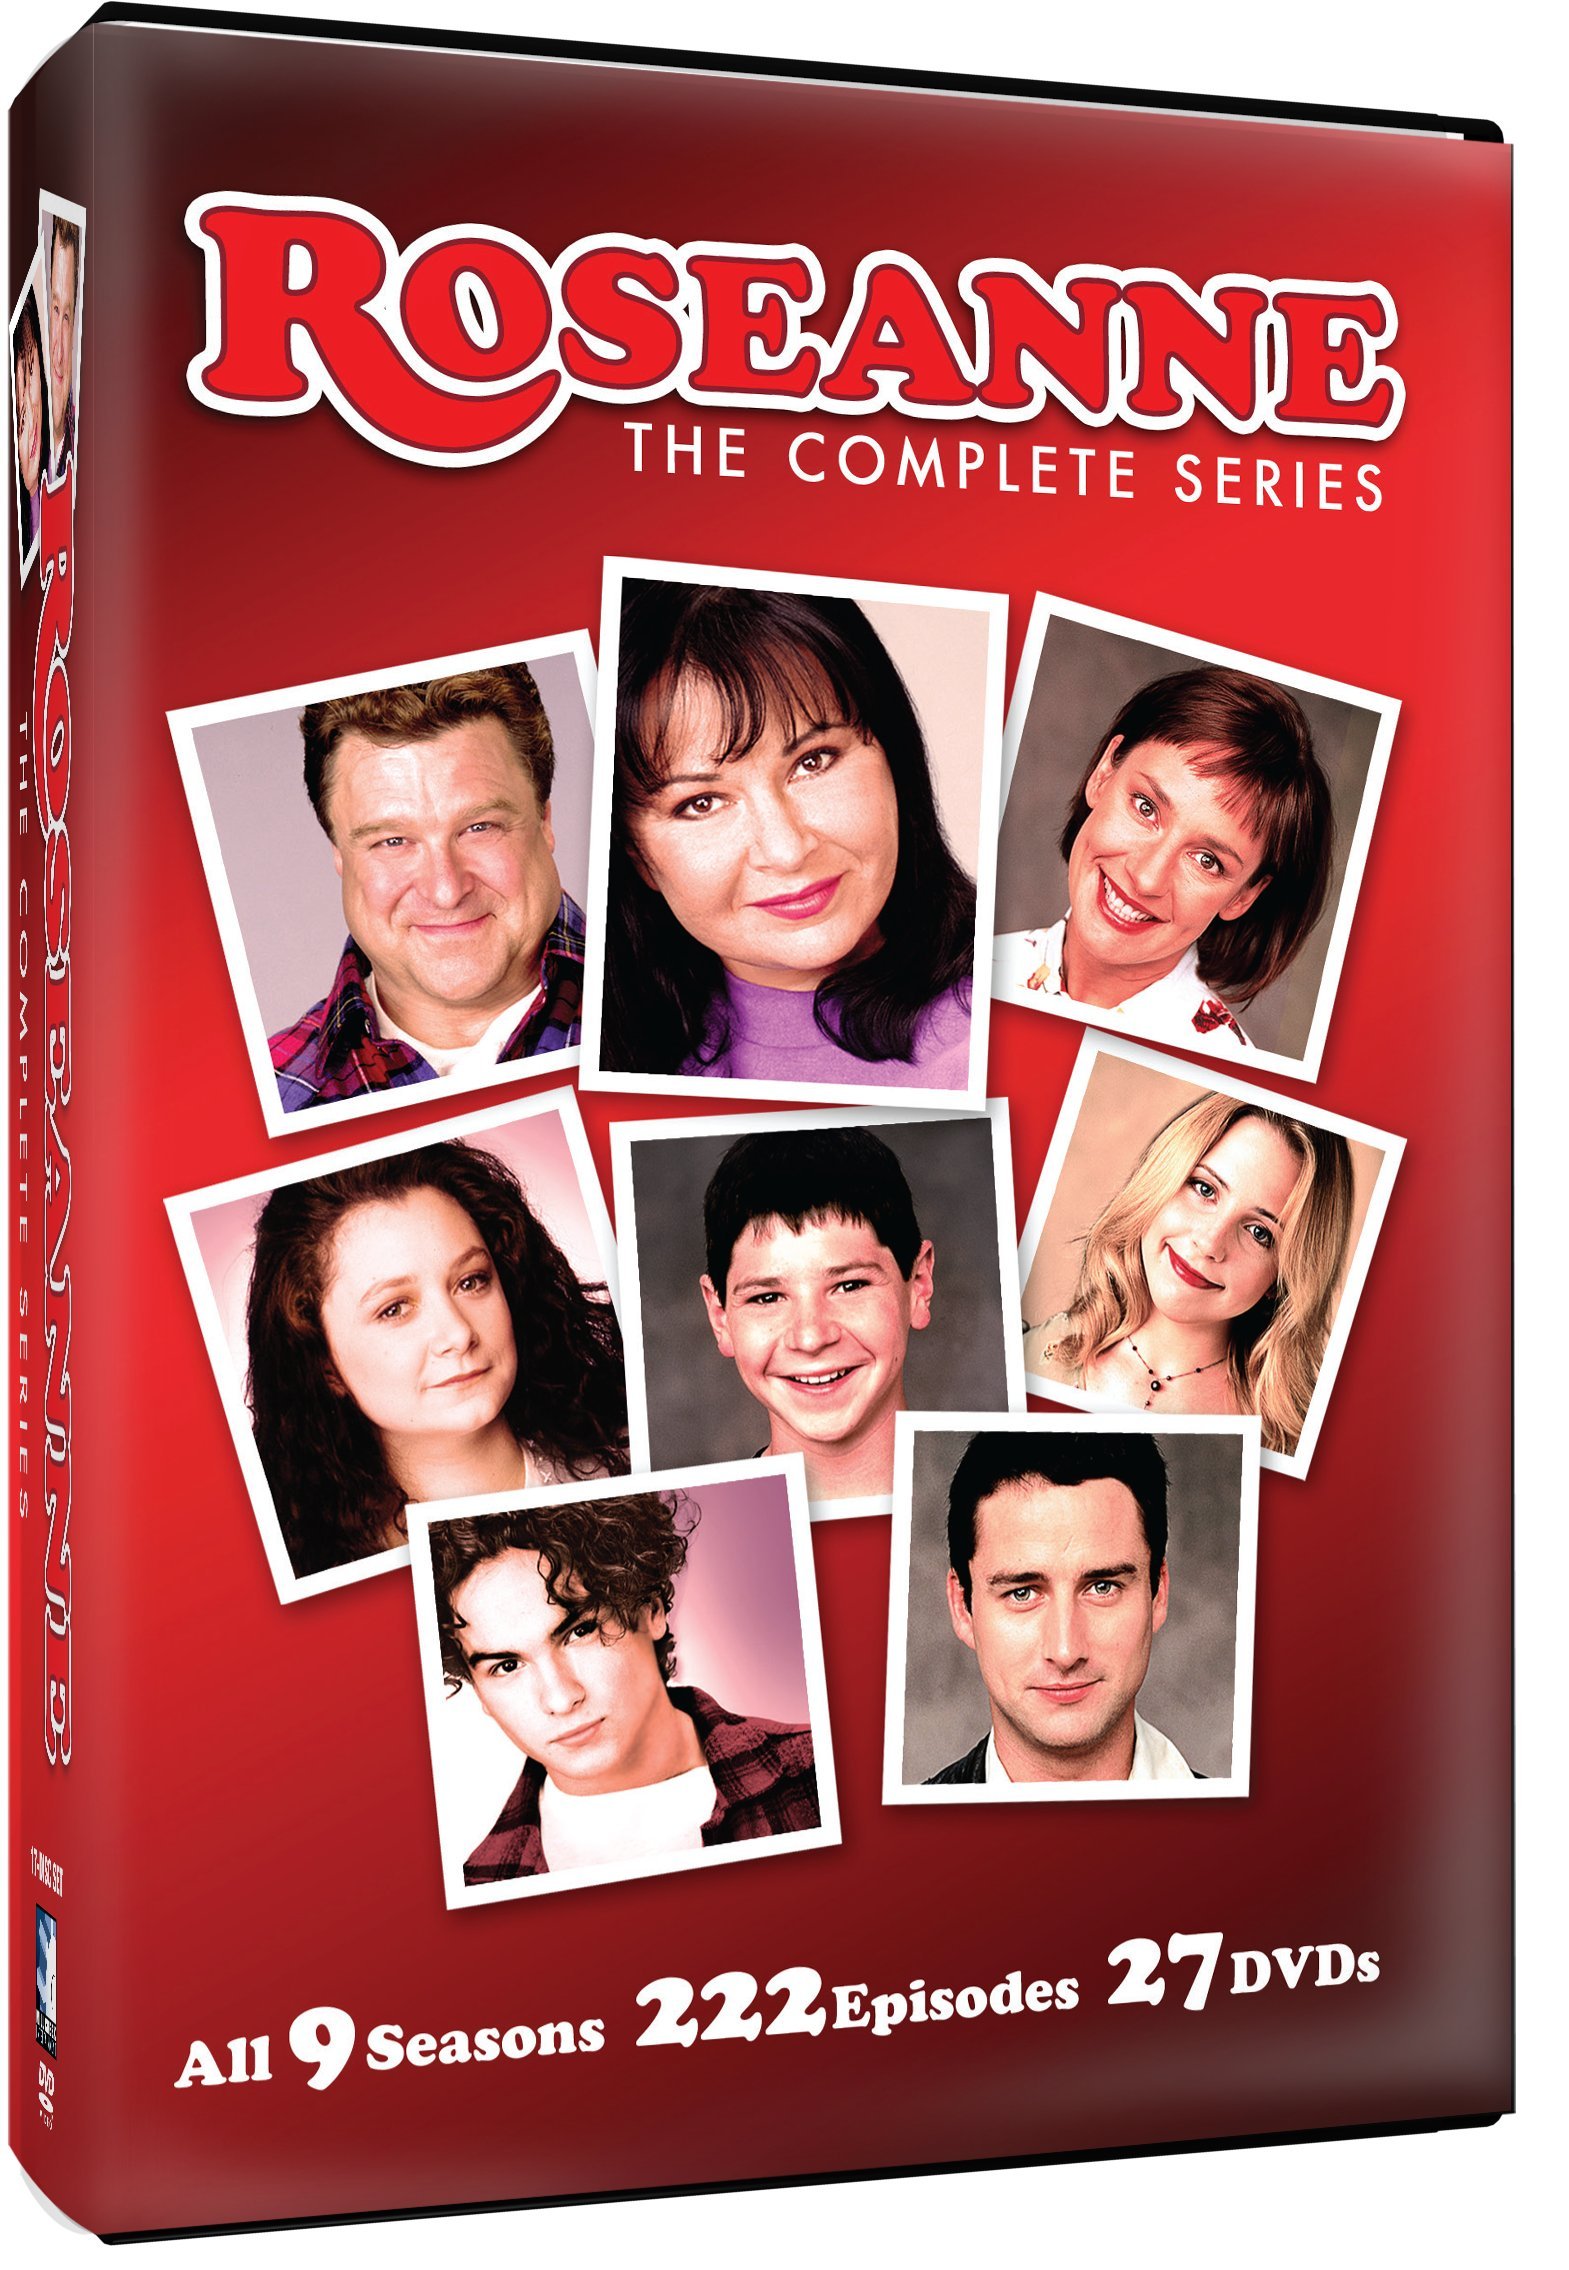 Roseanne: The Complete Series on MovieShack